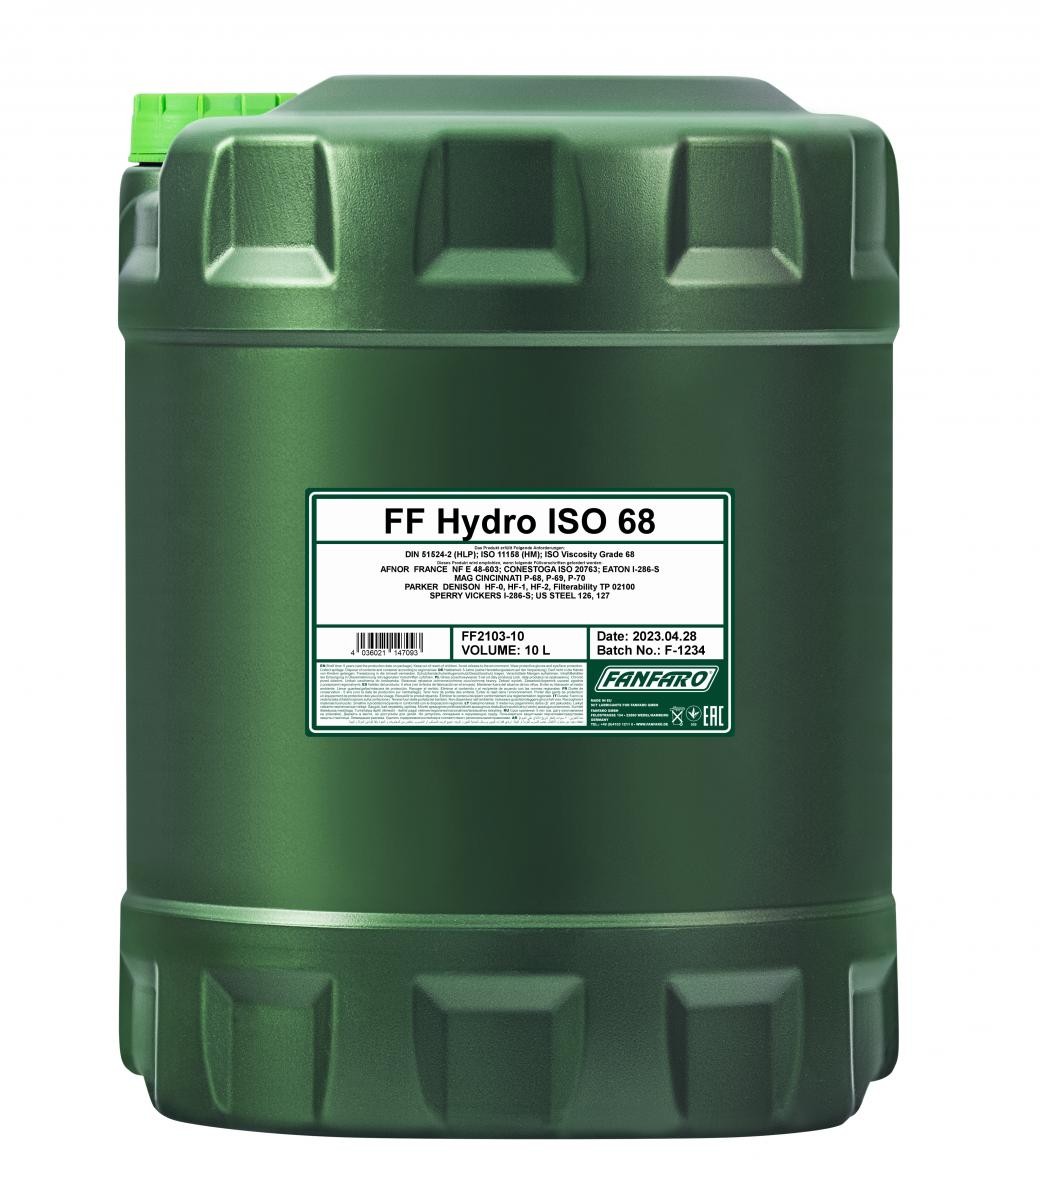 LKW Hydrauliköl FANFARO FF2103-10 kaufen